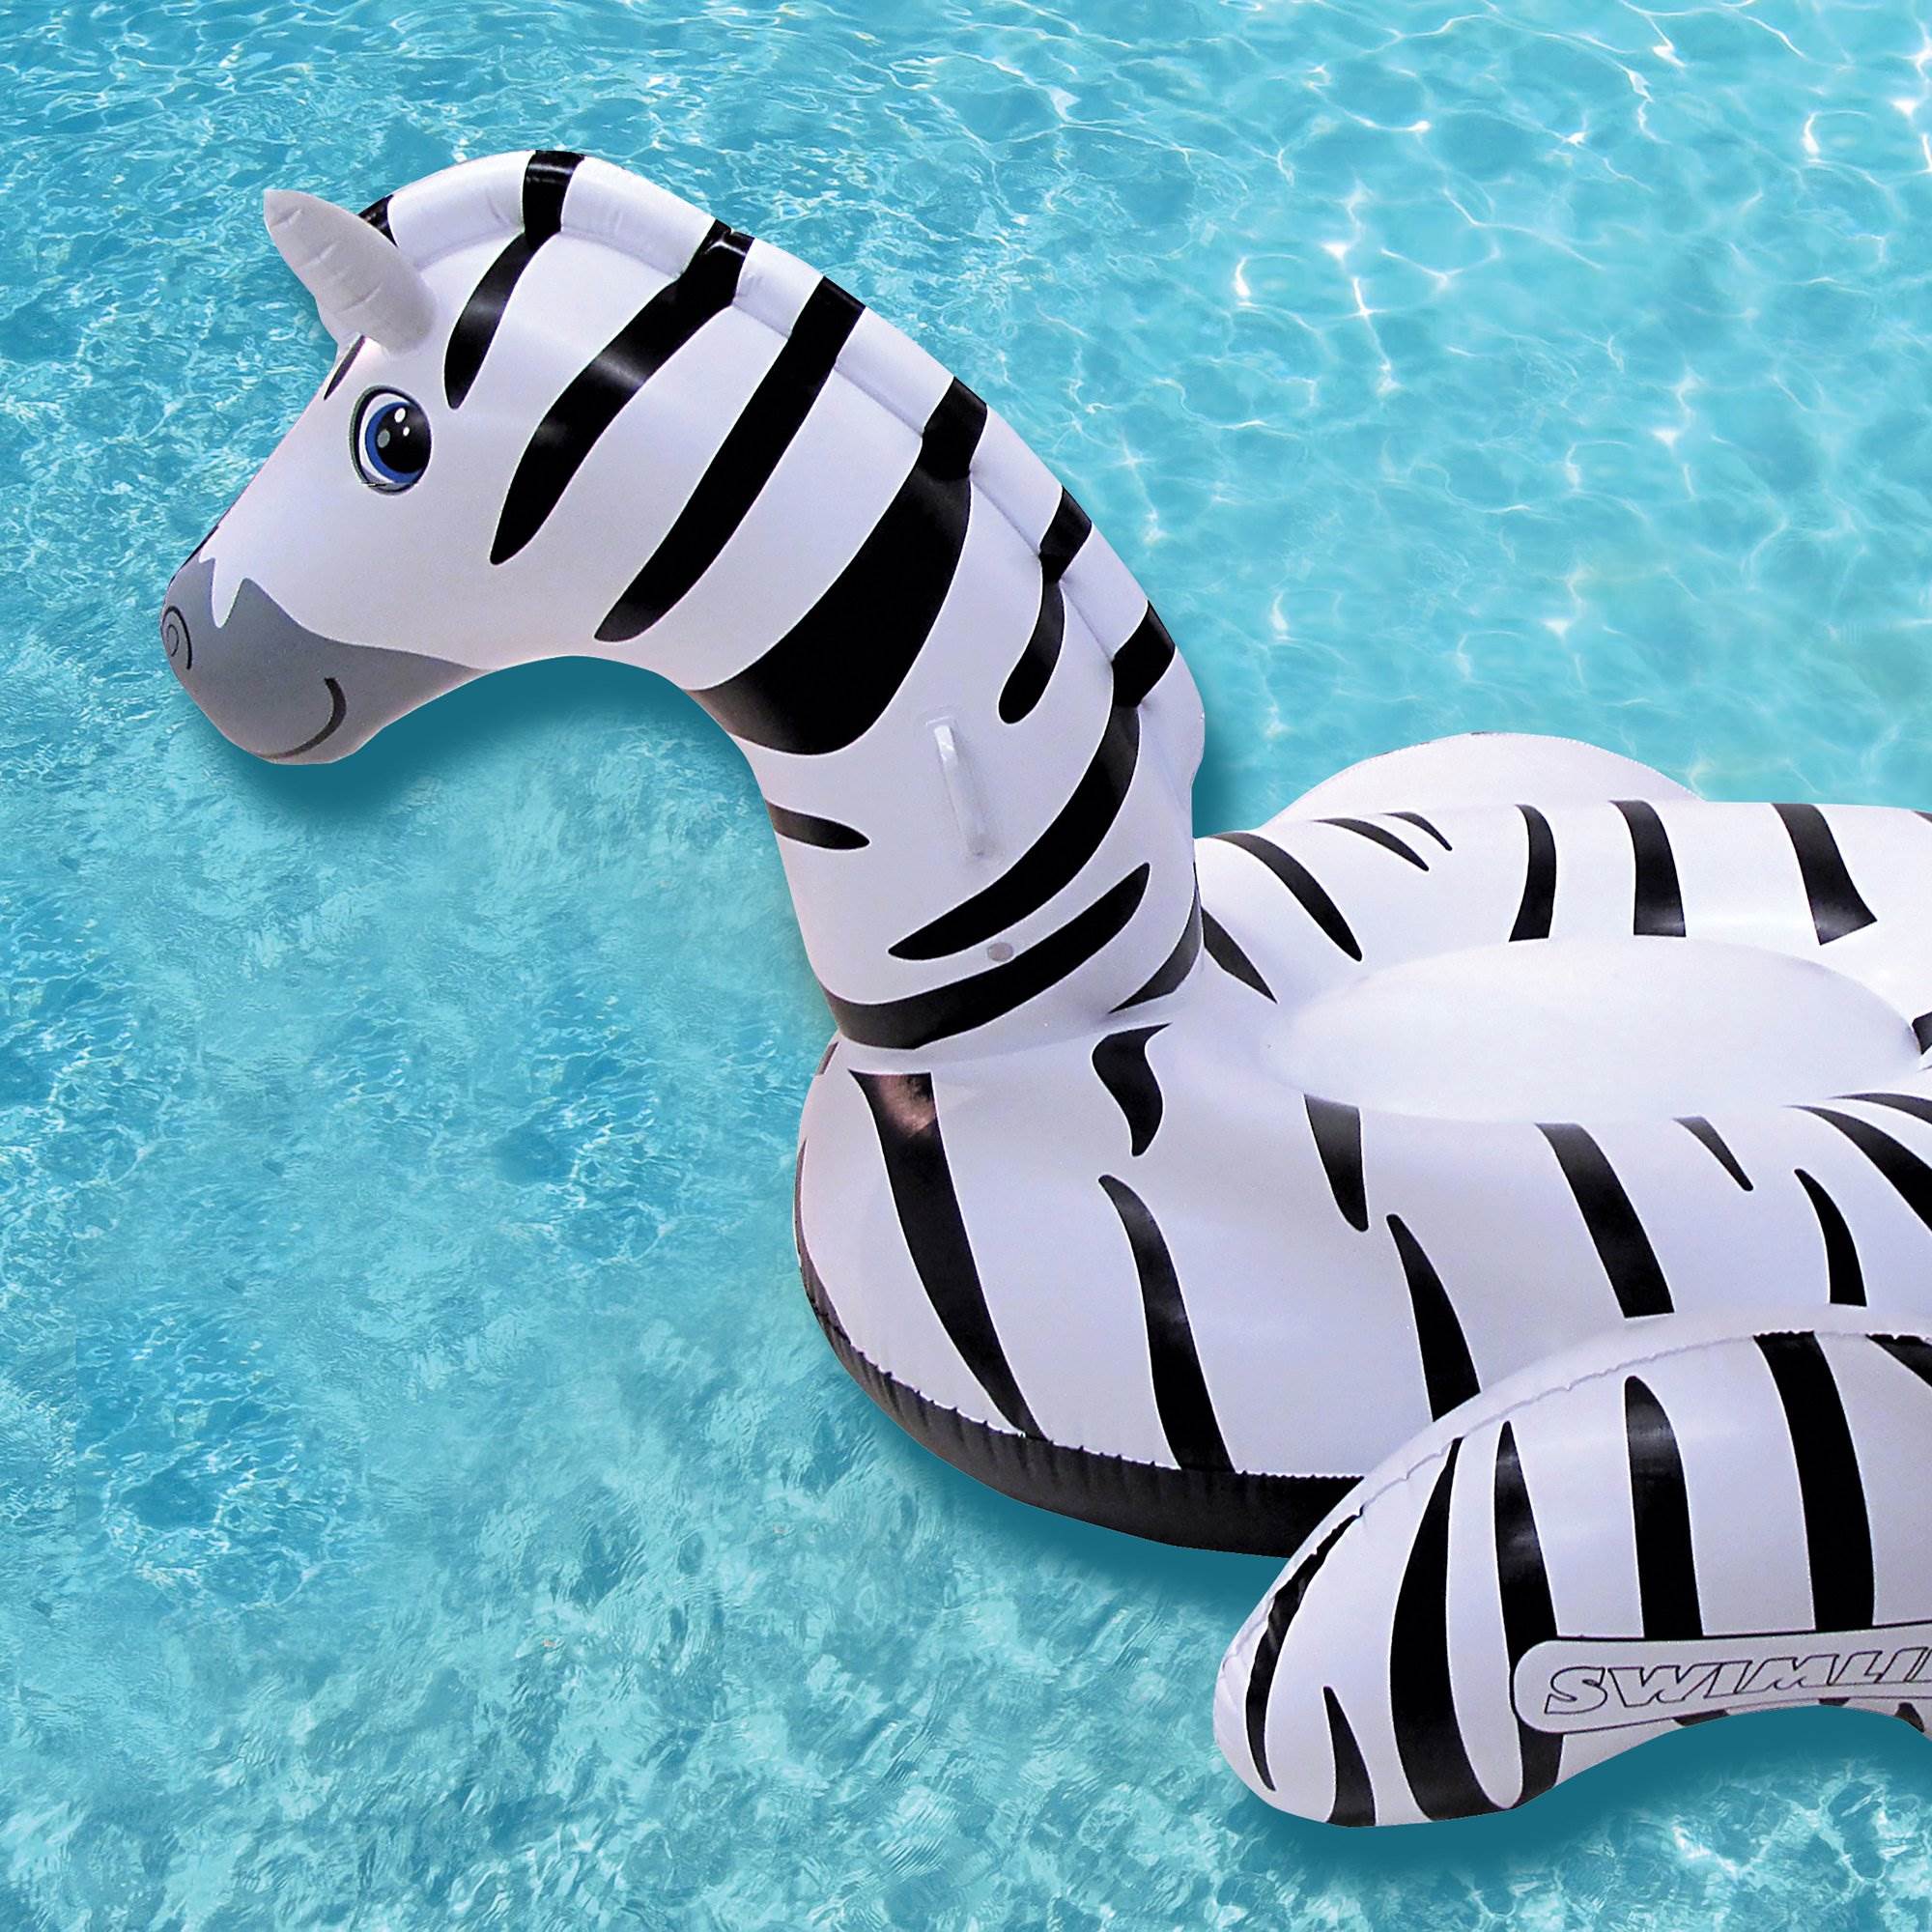 Swimline 90714 Safari Zebra Inflatable Ride On Swimming Pool Float